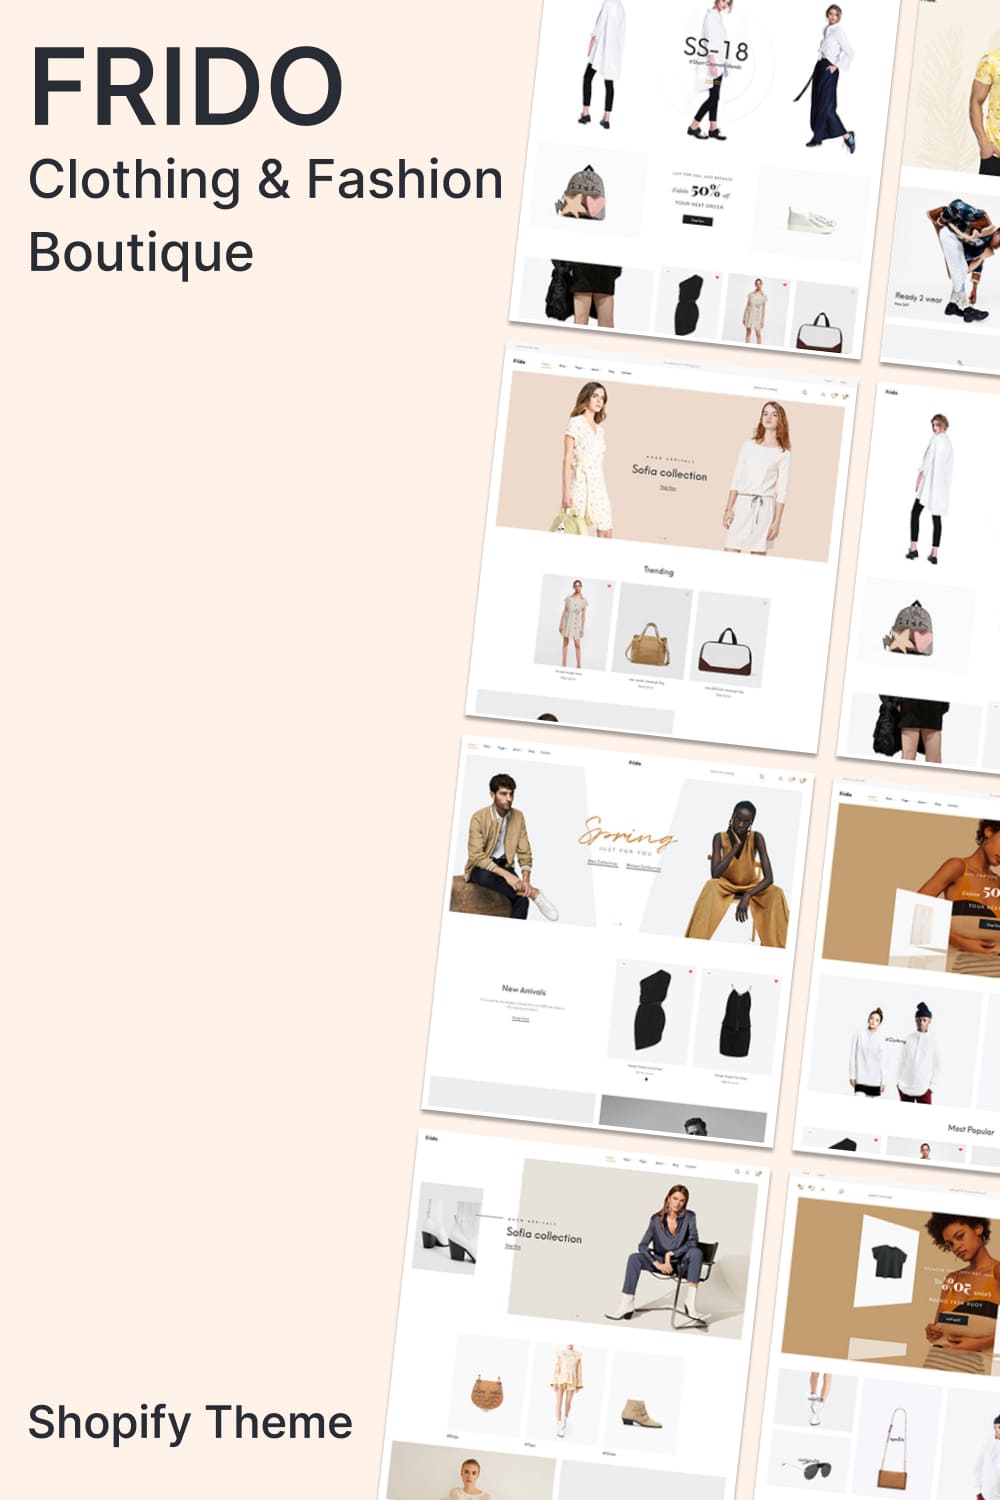 Ap Frido Clothing & Fashion Boutique Shopify Theme.